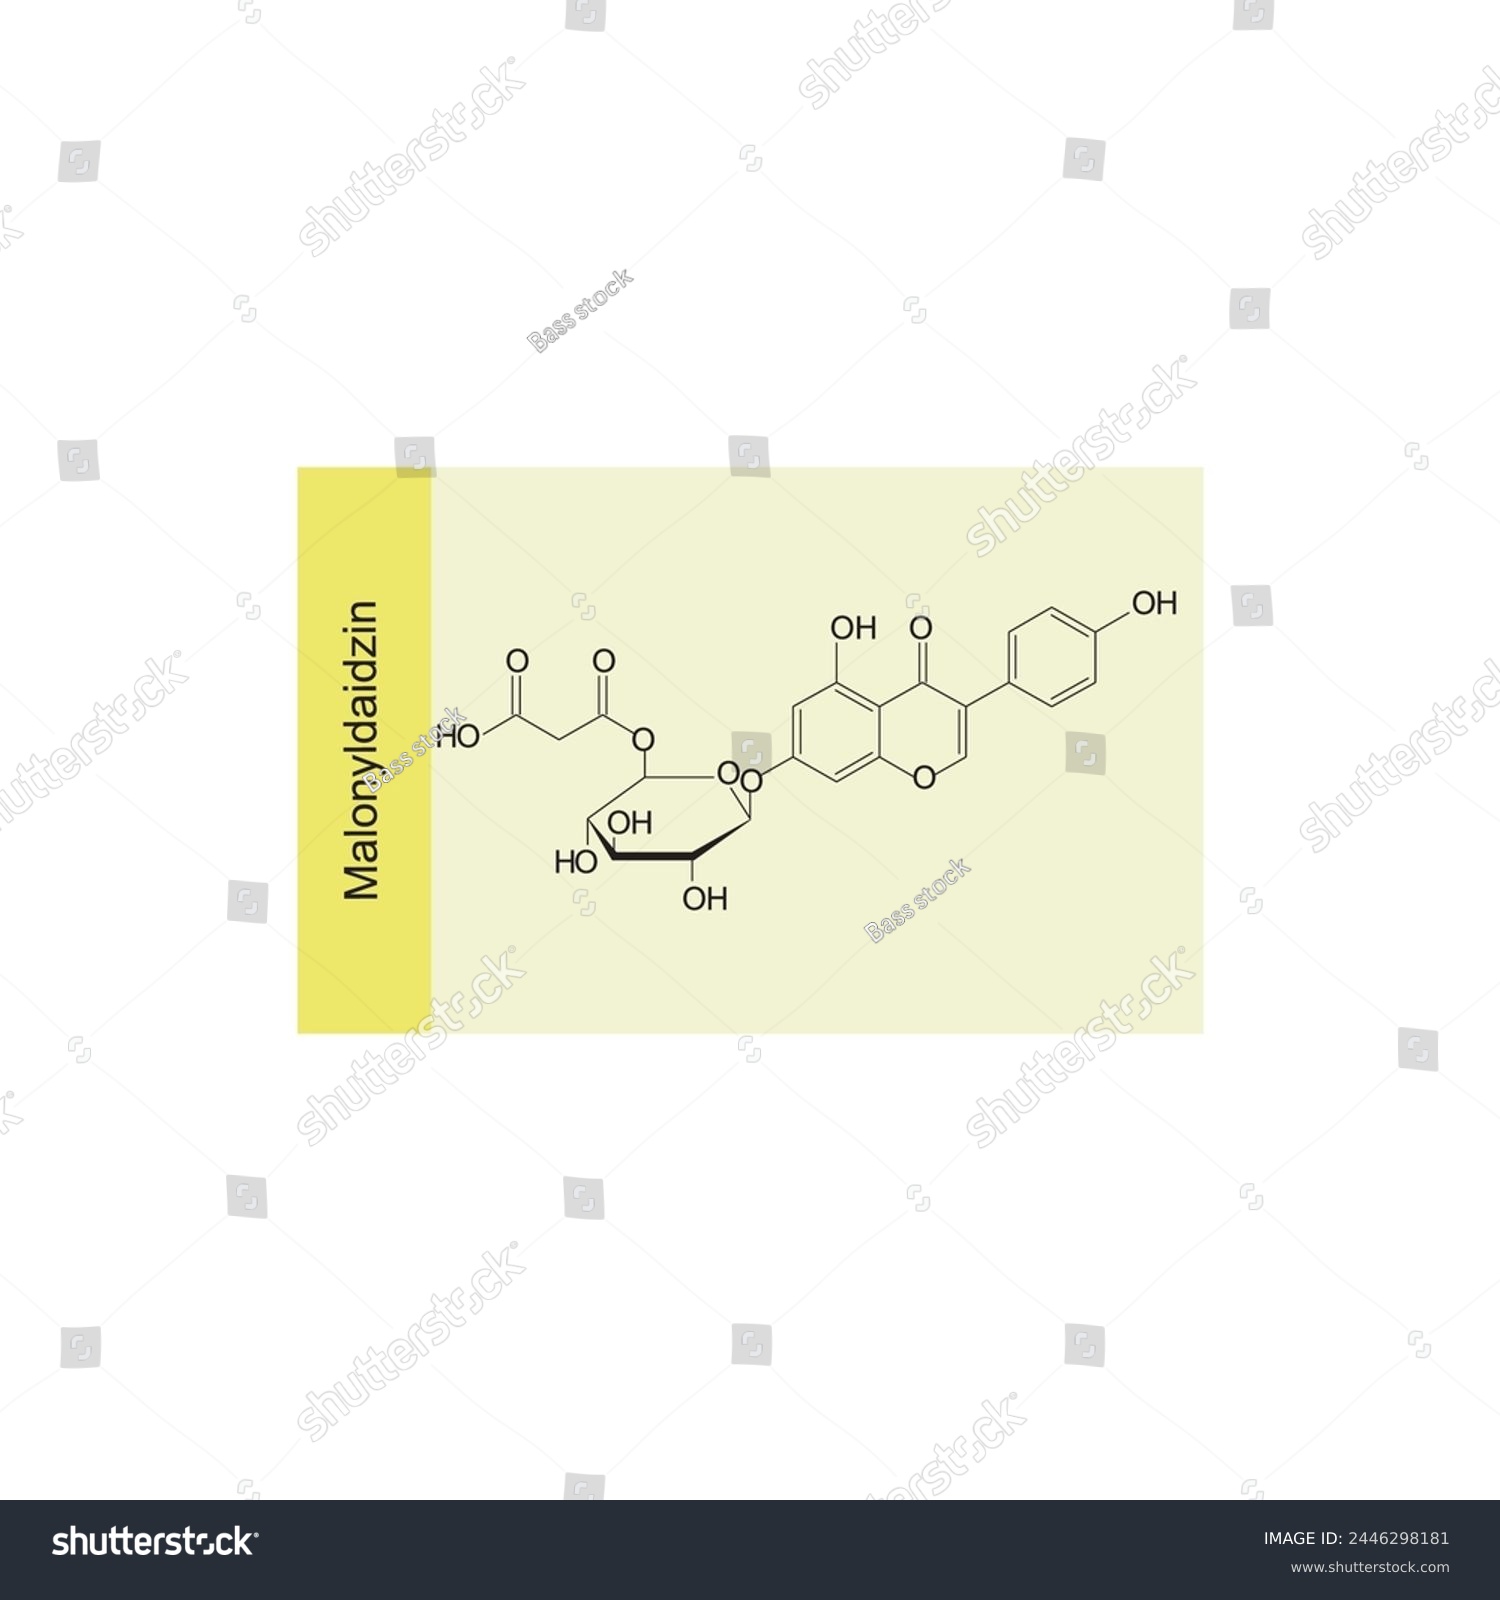 SVG of Malonylgenistin skeletal structure diagram.Isoflavanone compound molecule scientific illustration on yellow background. svg